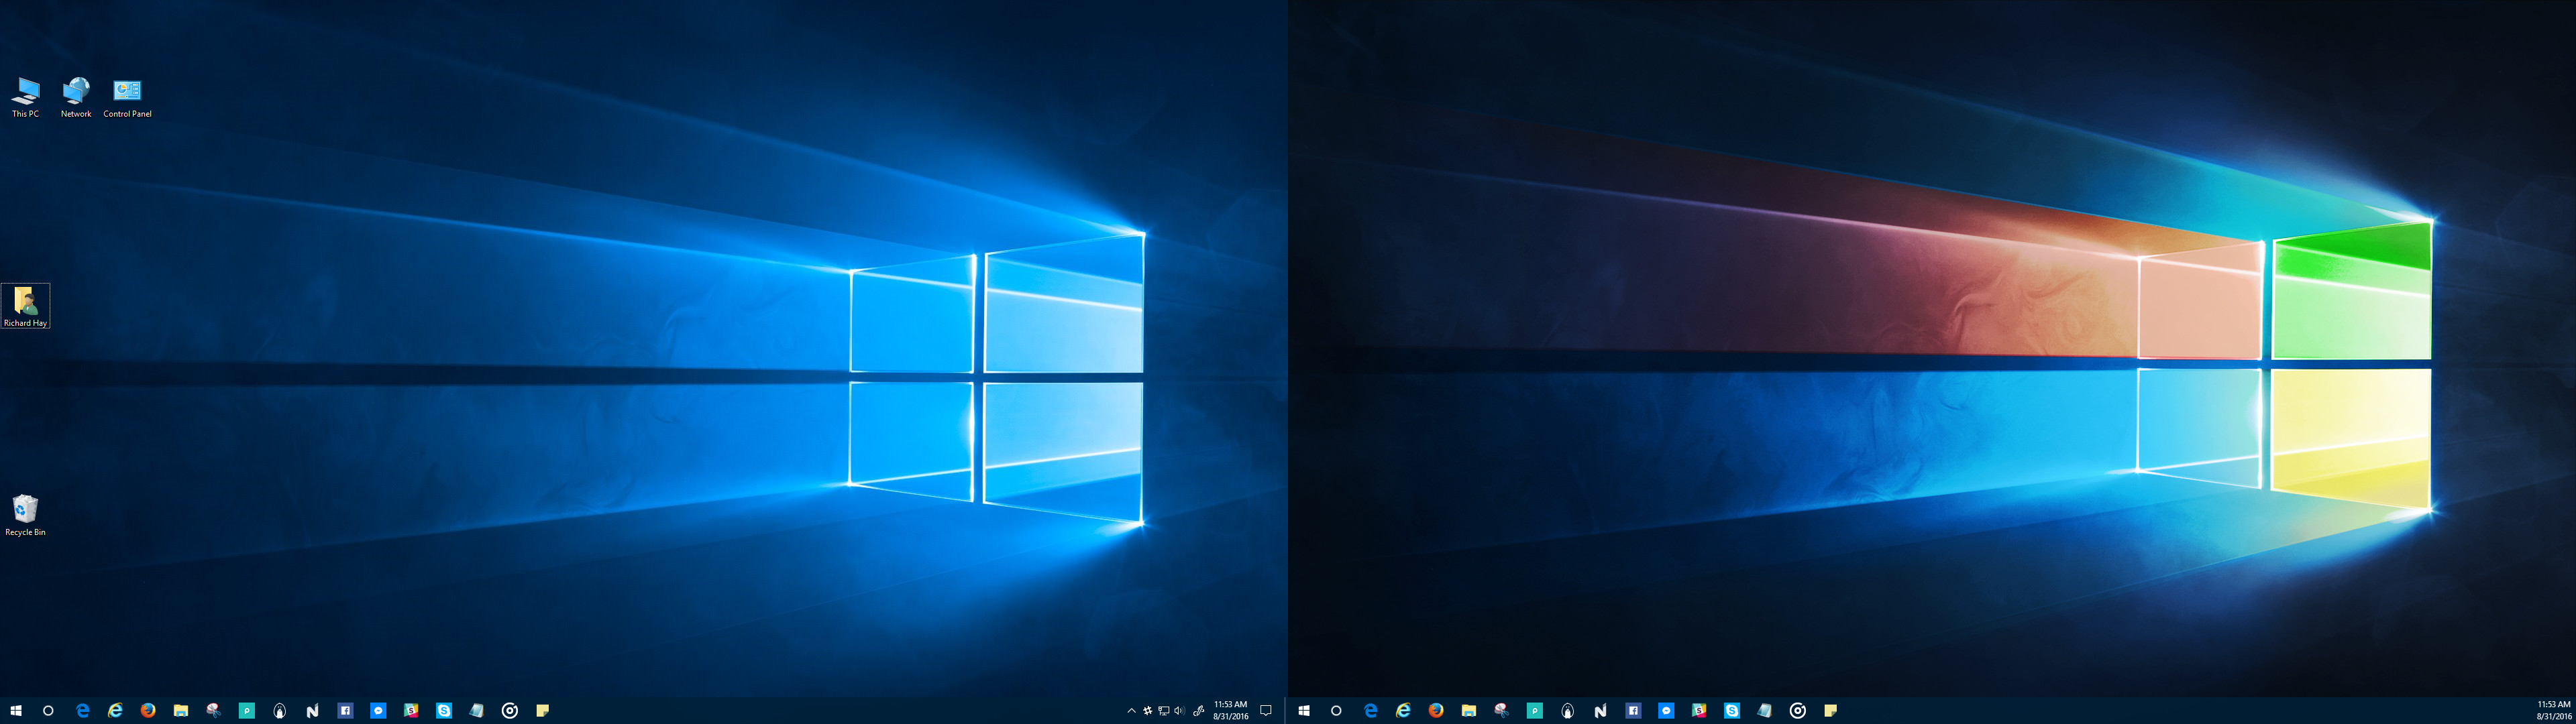 Dual Monitor Wallpaper Windows 10 33 Images